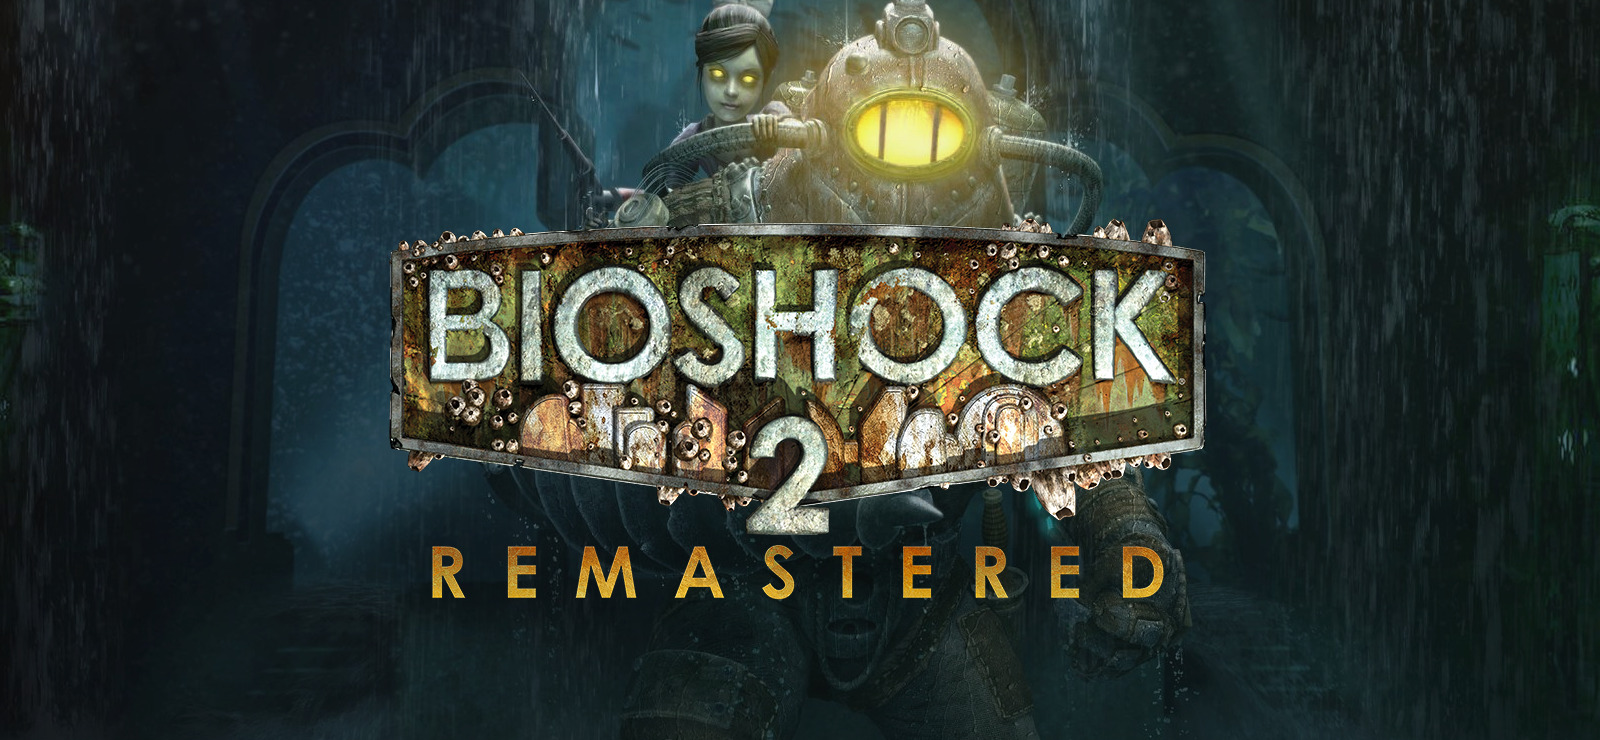 BioShock™ Remastered Download For Mac